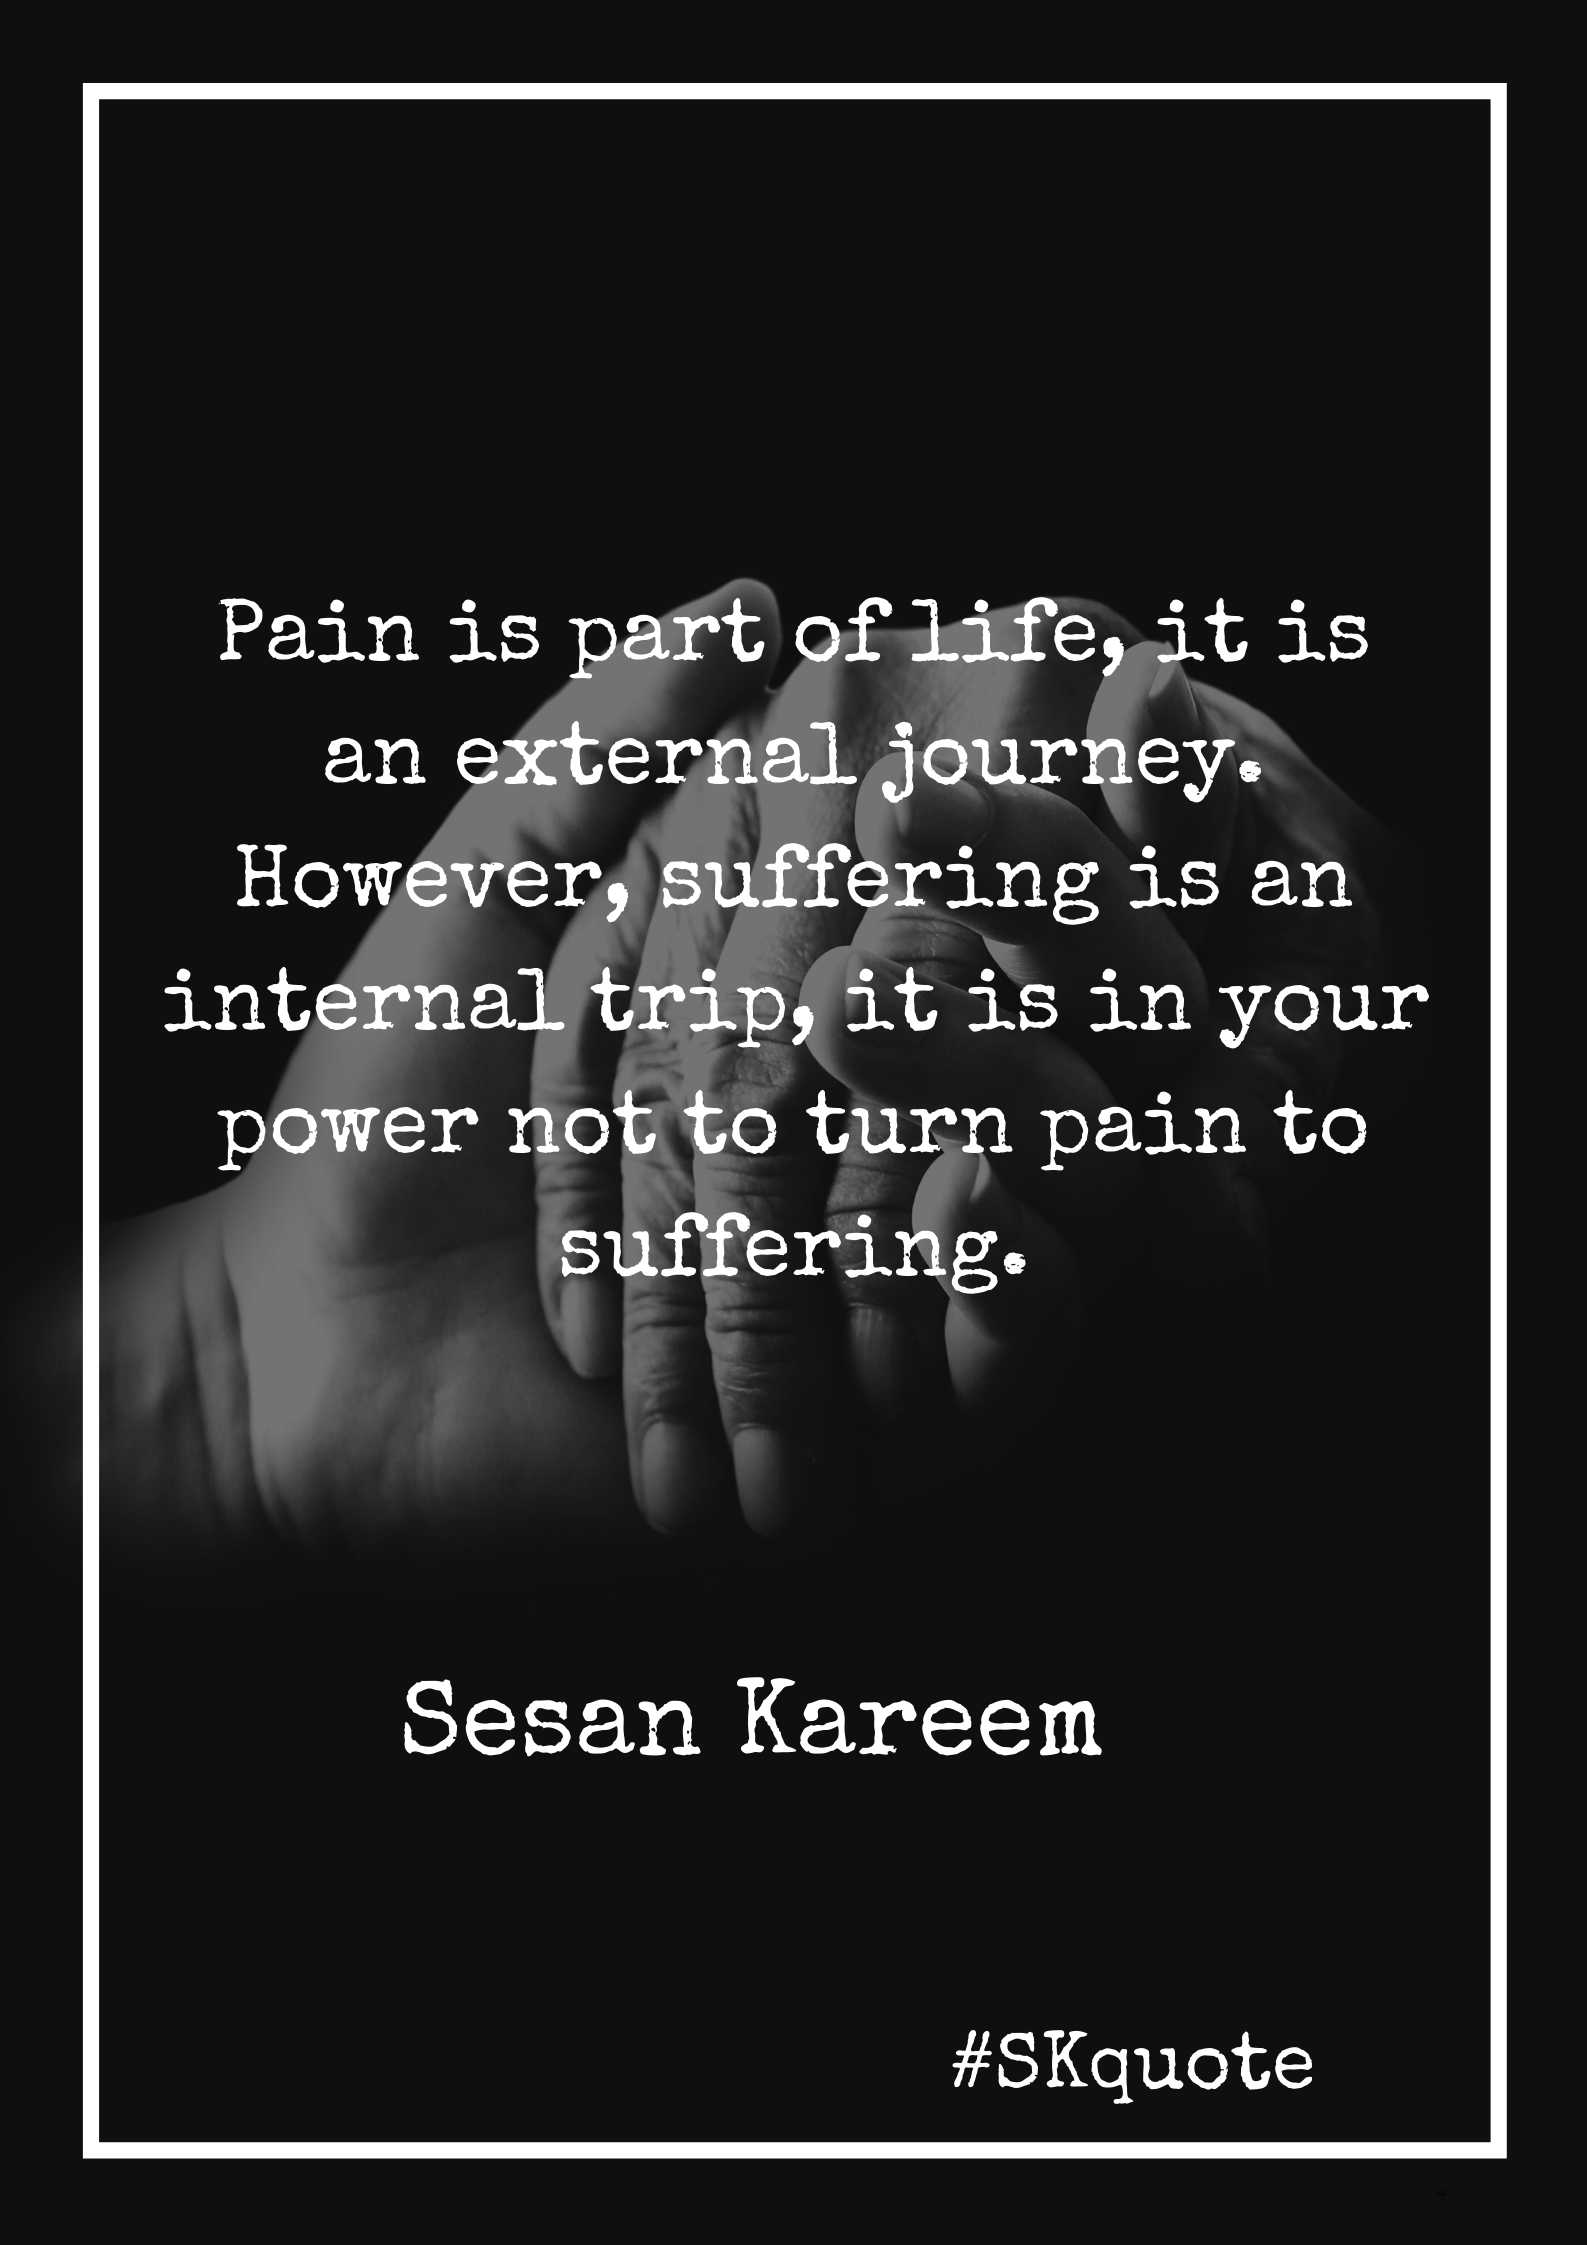 Sesan Kareem quote on pain